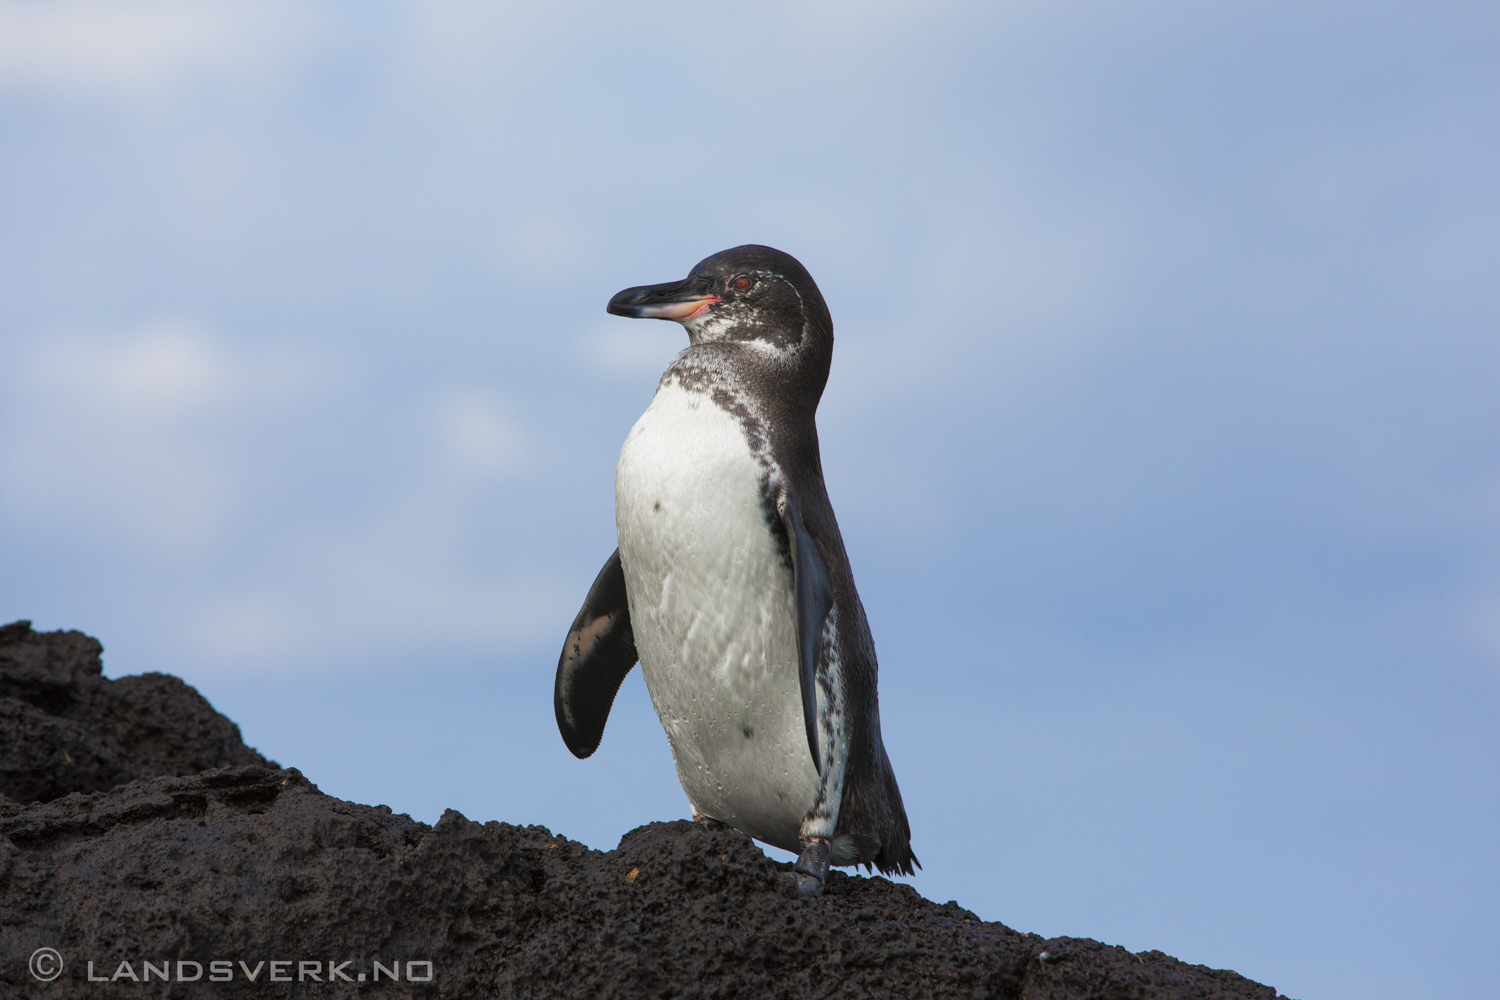 Wild Galapagos Penguin, Sombrero Chino, Galapagos. 

(Canon EOS 5D Mark III / Canon EF 70-200mm f/2.8 L IS II USM)